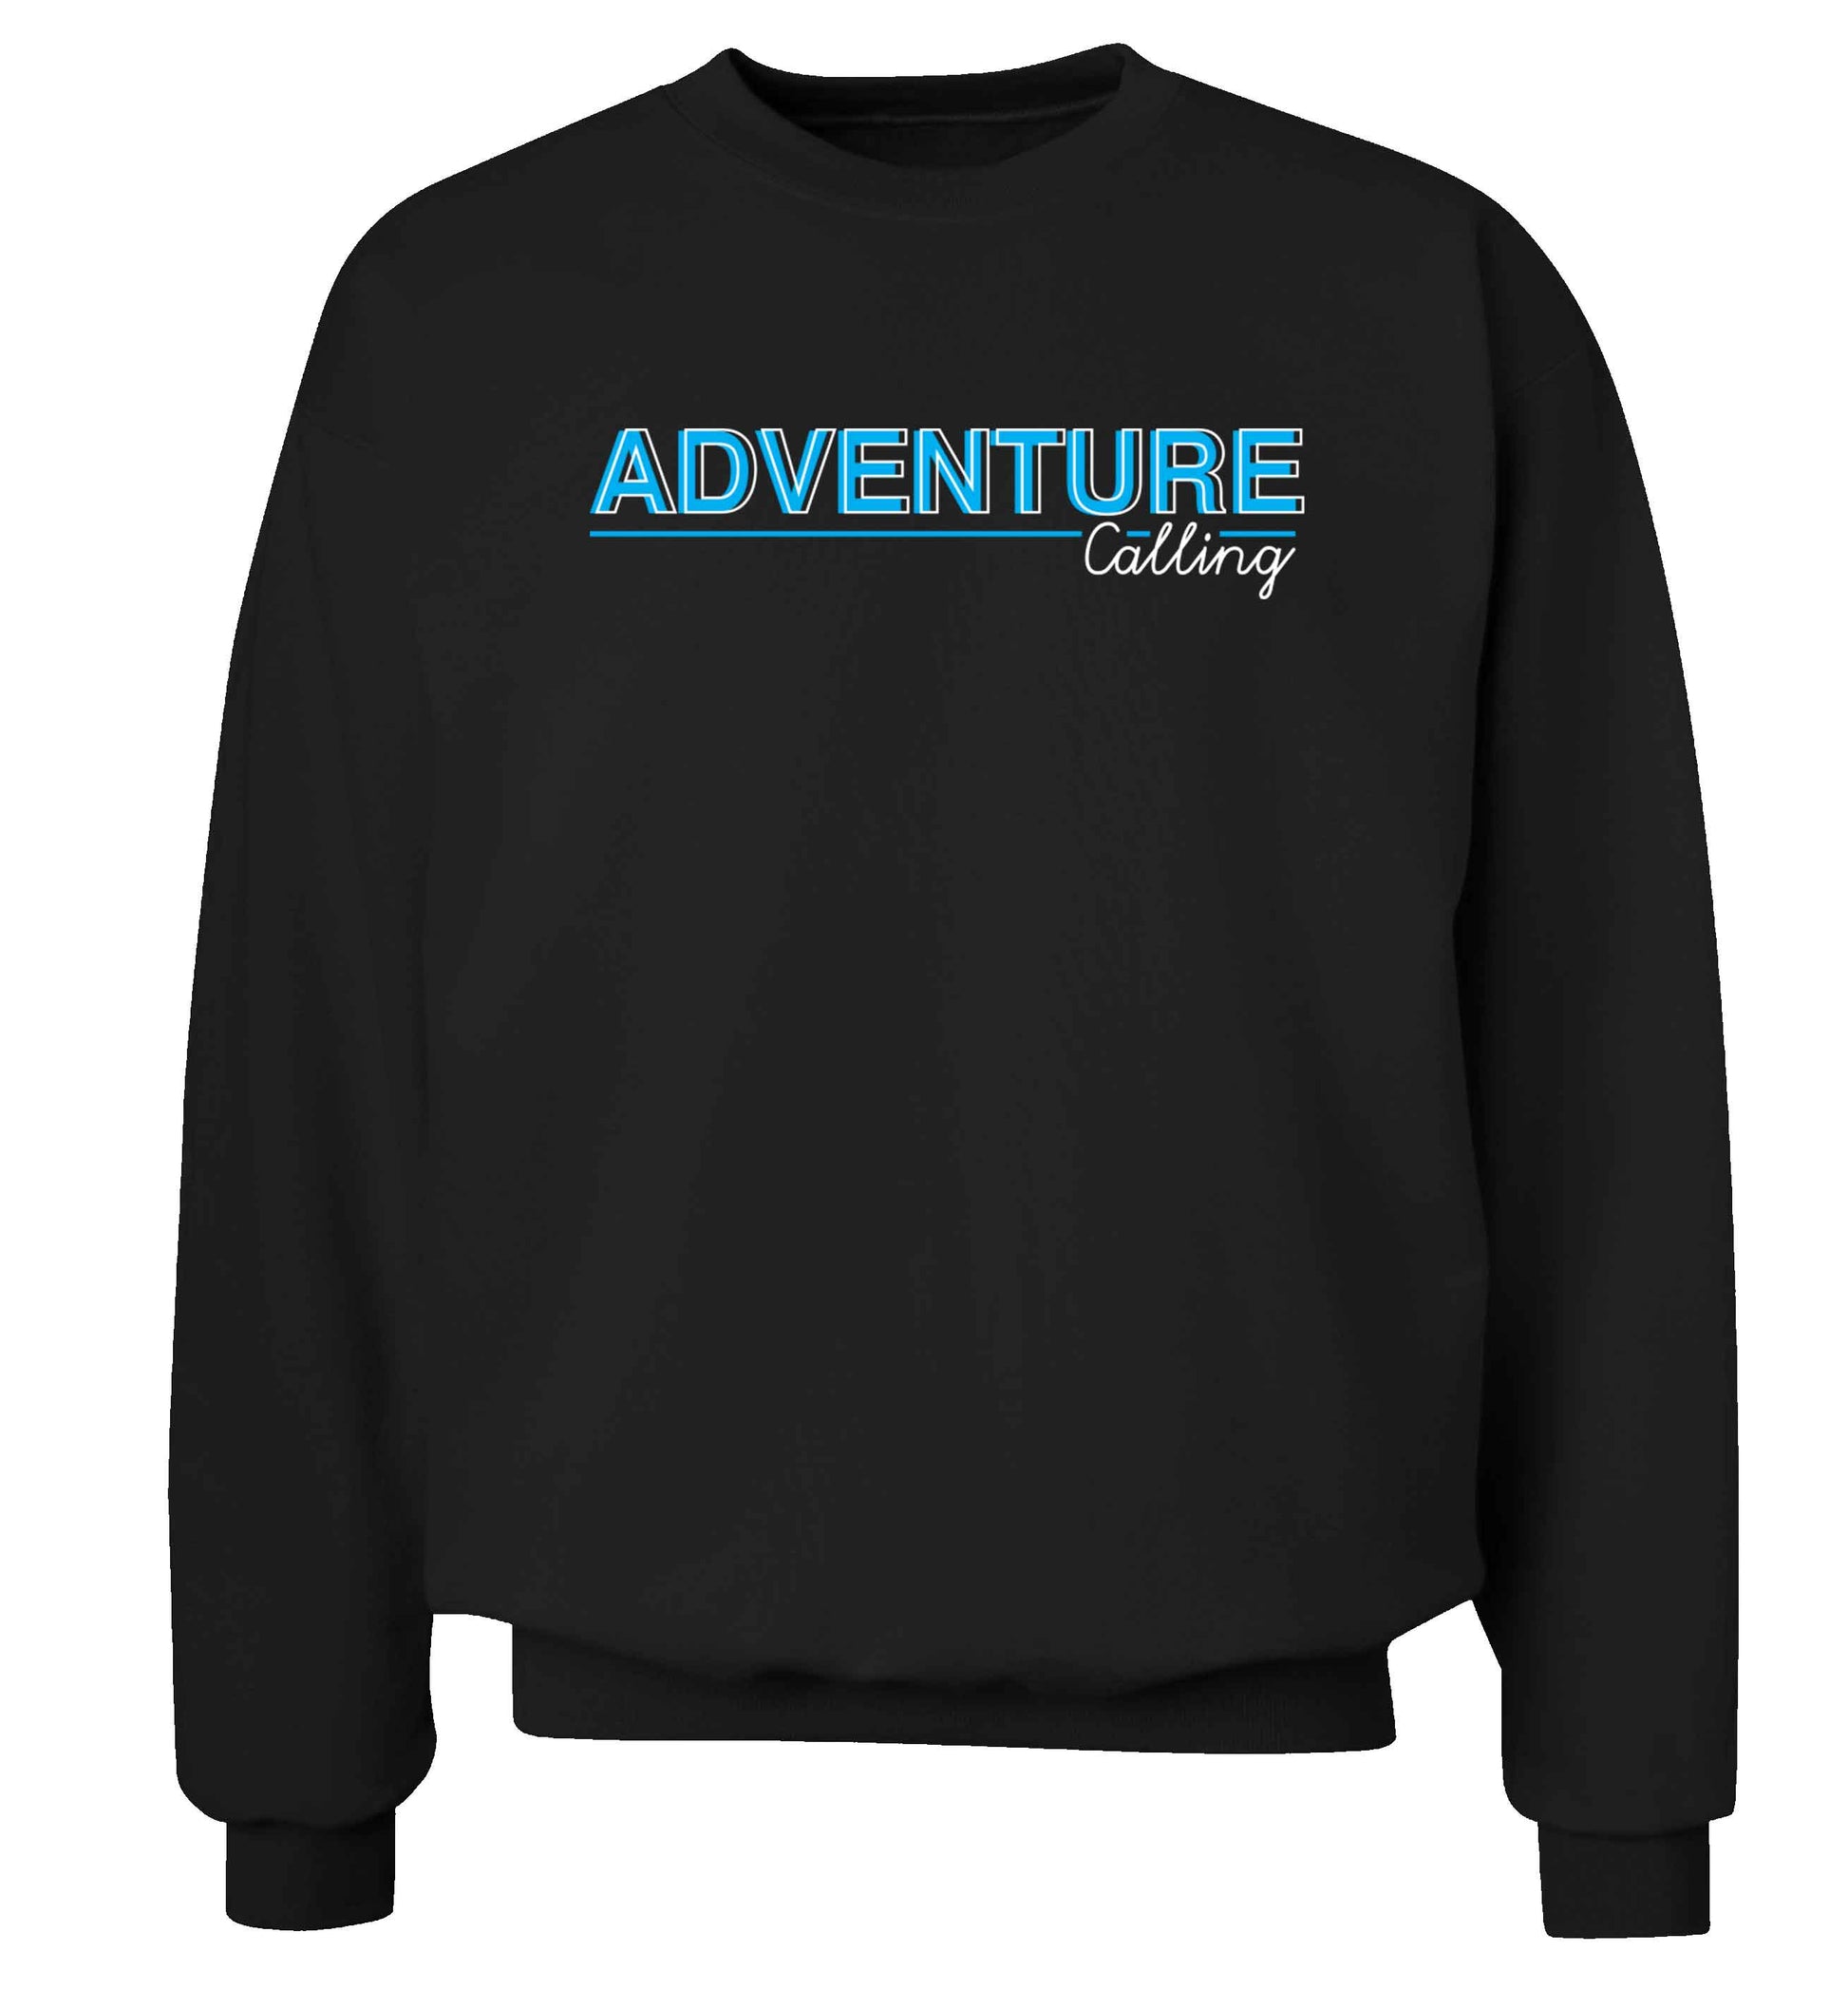 Adventure calling Adult's unisex black Sweater 2XL